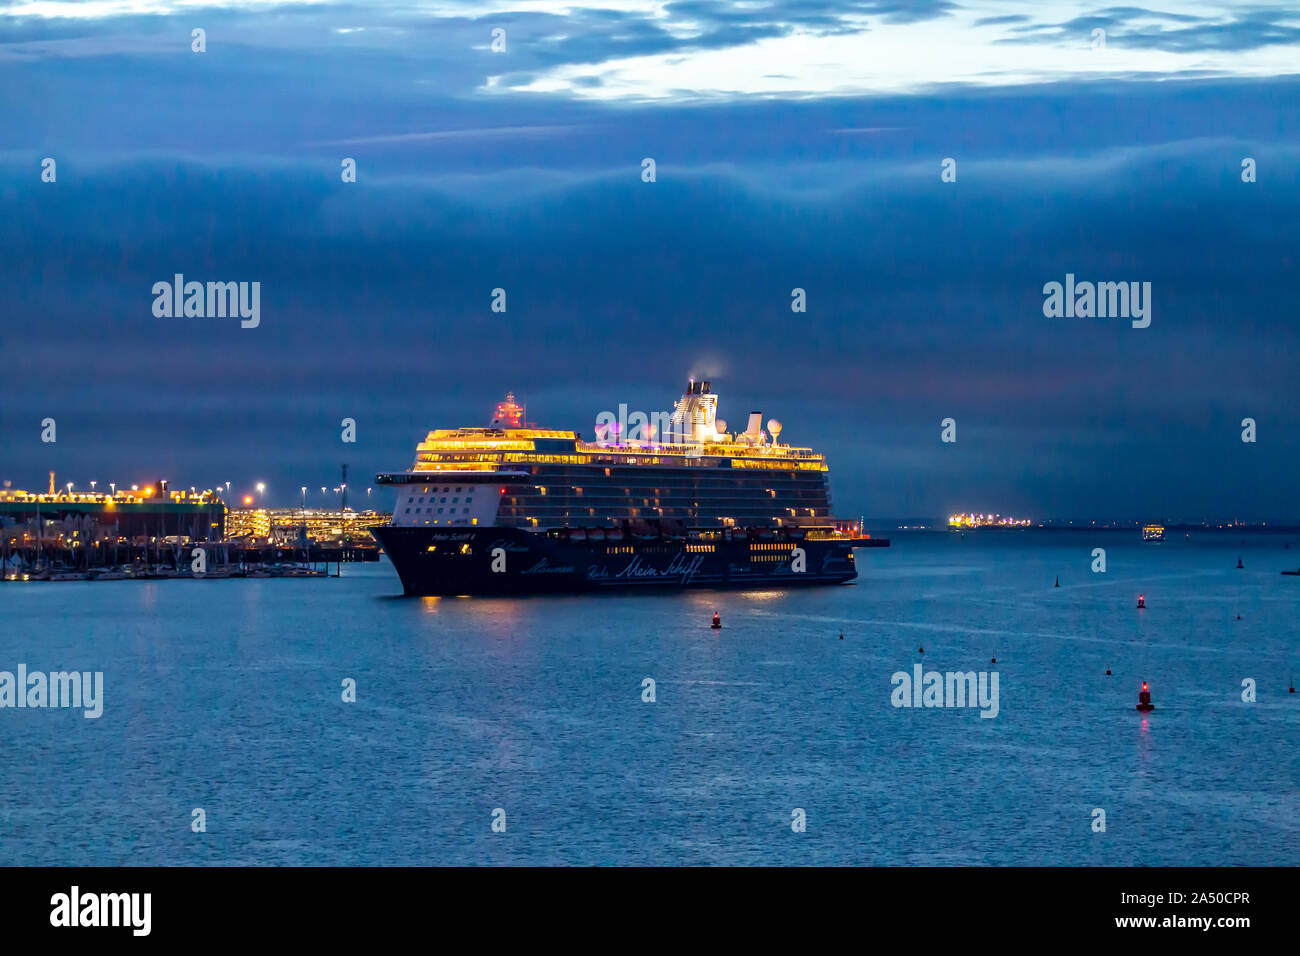 TUI Cruises ship Main Schiff 4 coming into port during the blue hour, Southampton, Hampshire, UK. Stock Photo